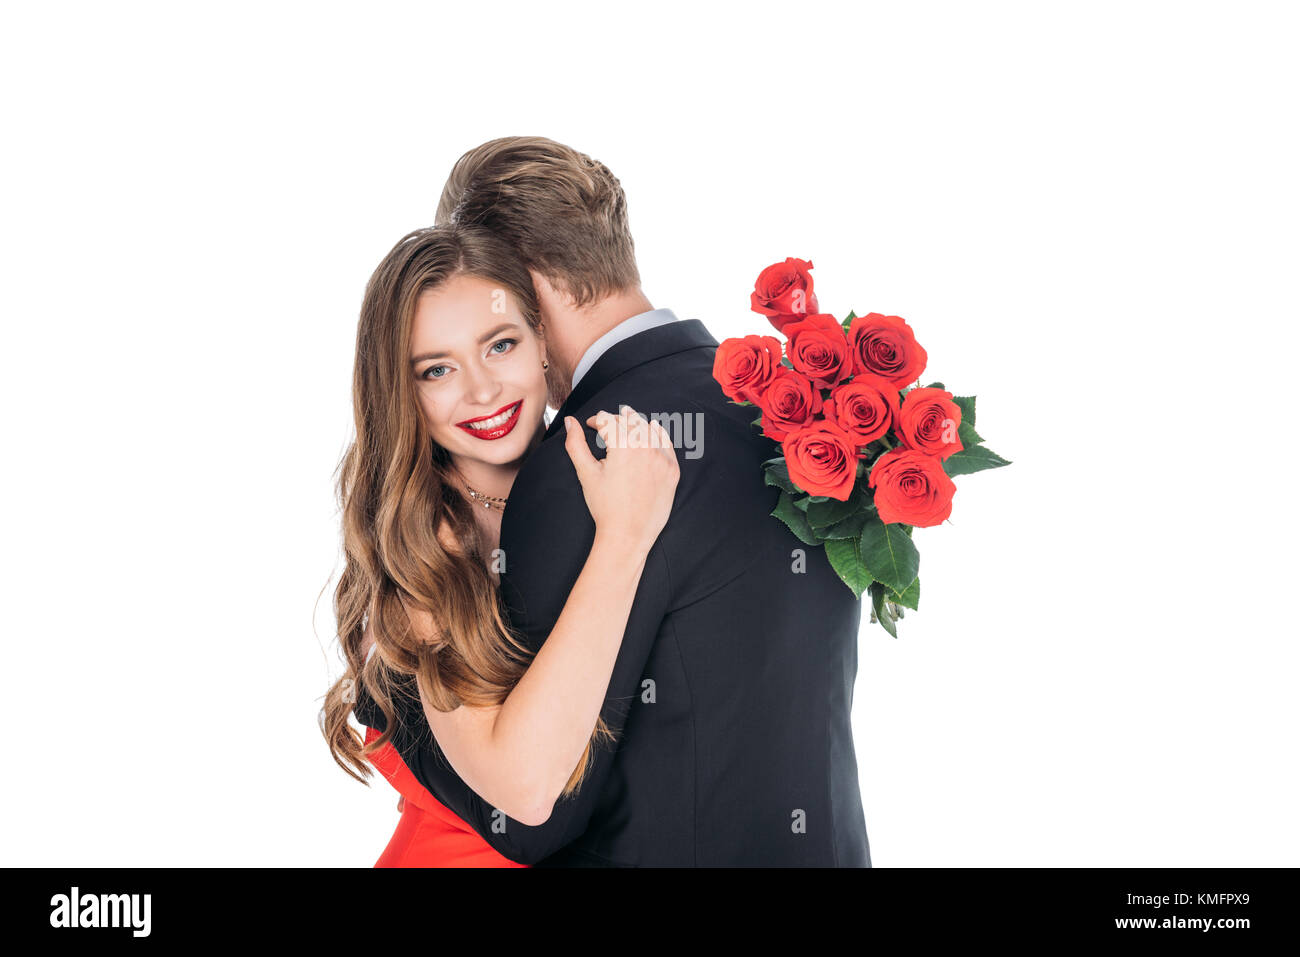 boyfriend giving flowers to his girlfriend on valentine's day Stock Photo -  Alamy